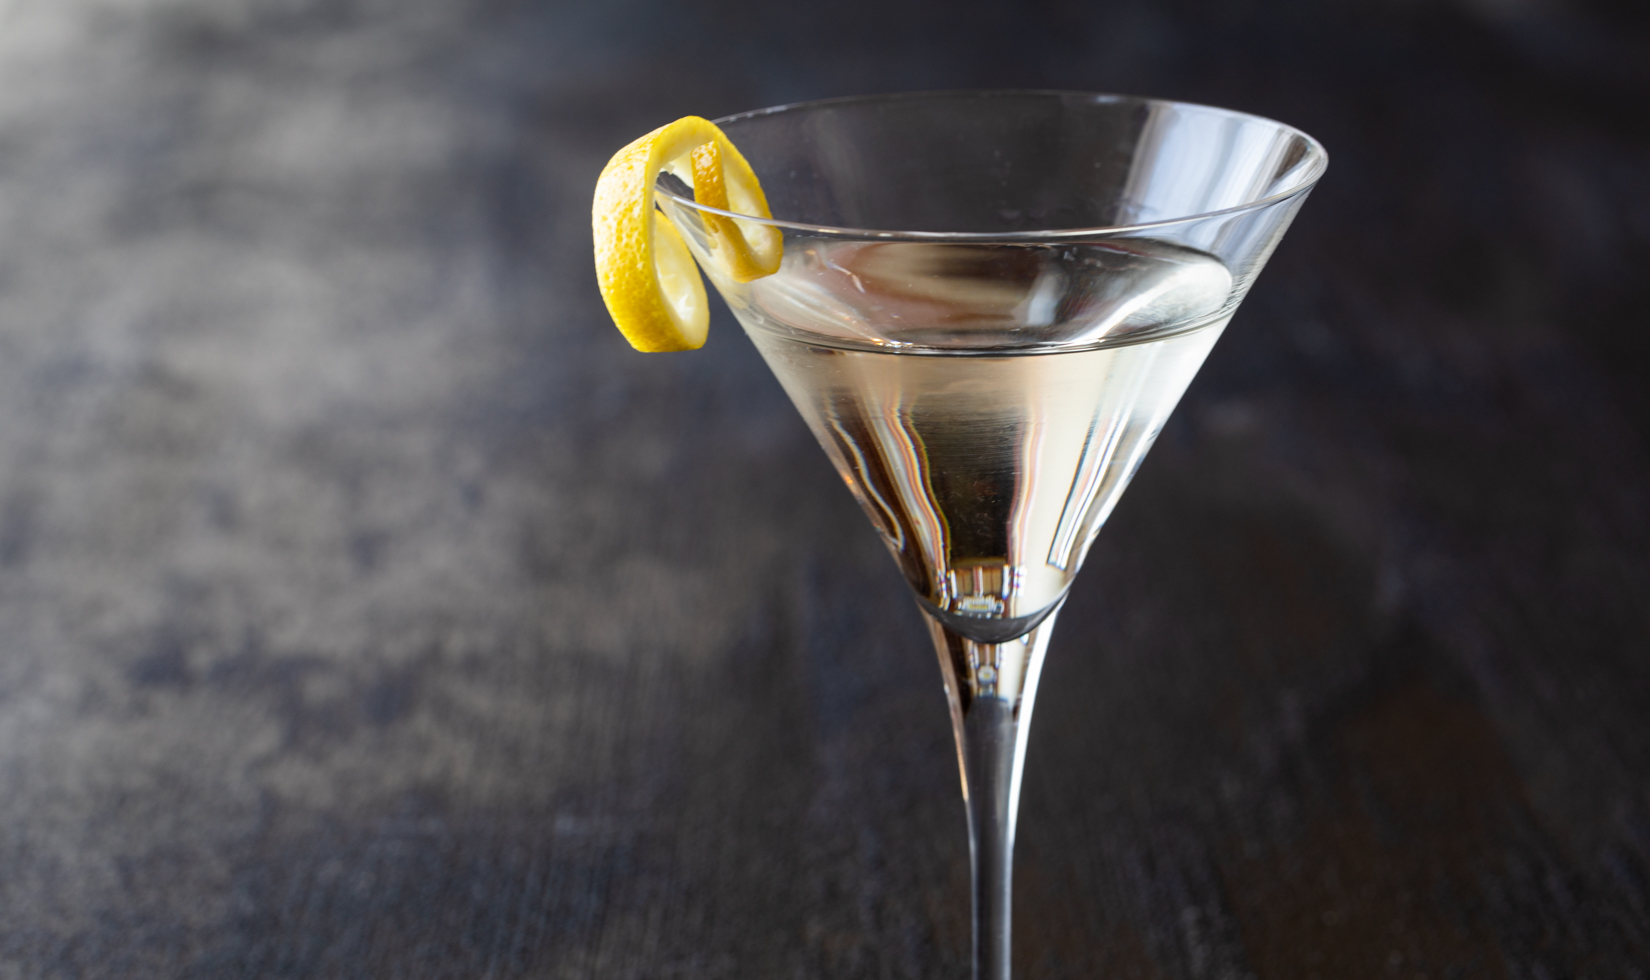 James Bond Vesper 007 Halloween Cocktail with Lemon Twist